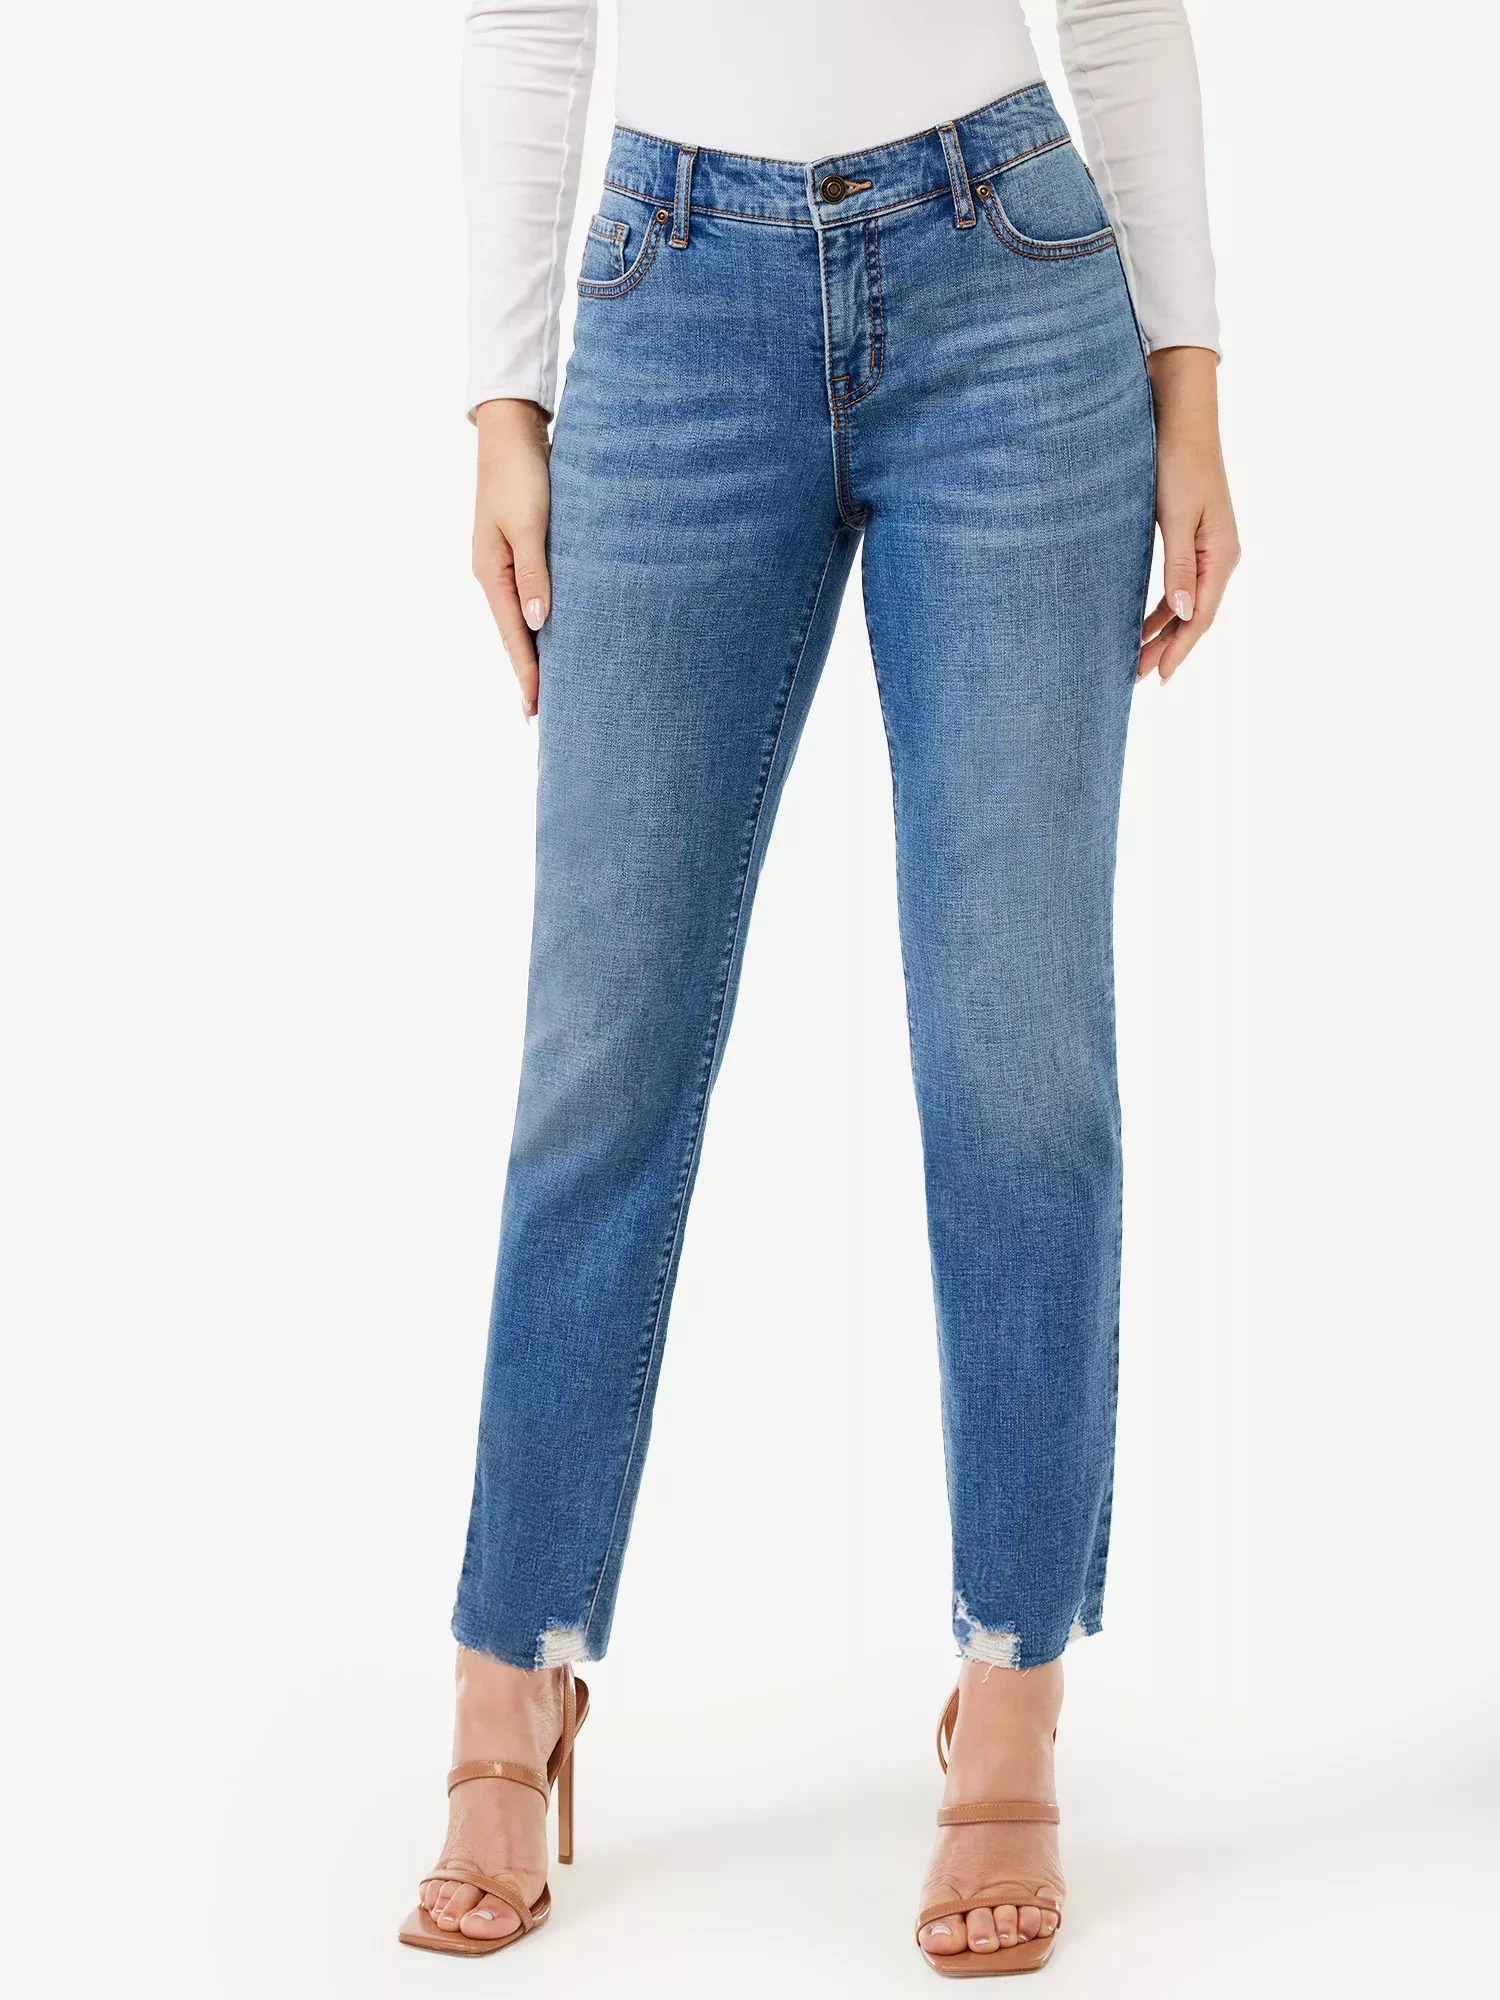 Sofia Jeans Women's Mayra High Waist Crop Kick Flare Jeans